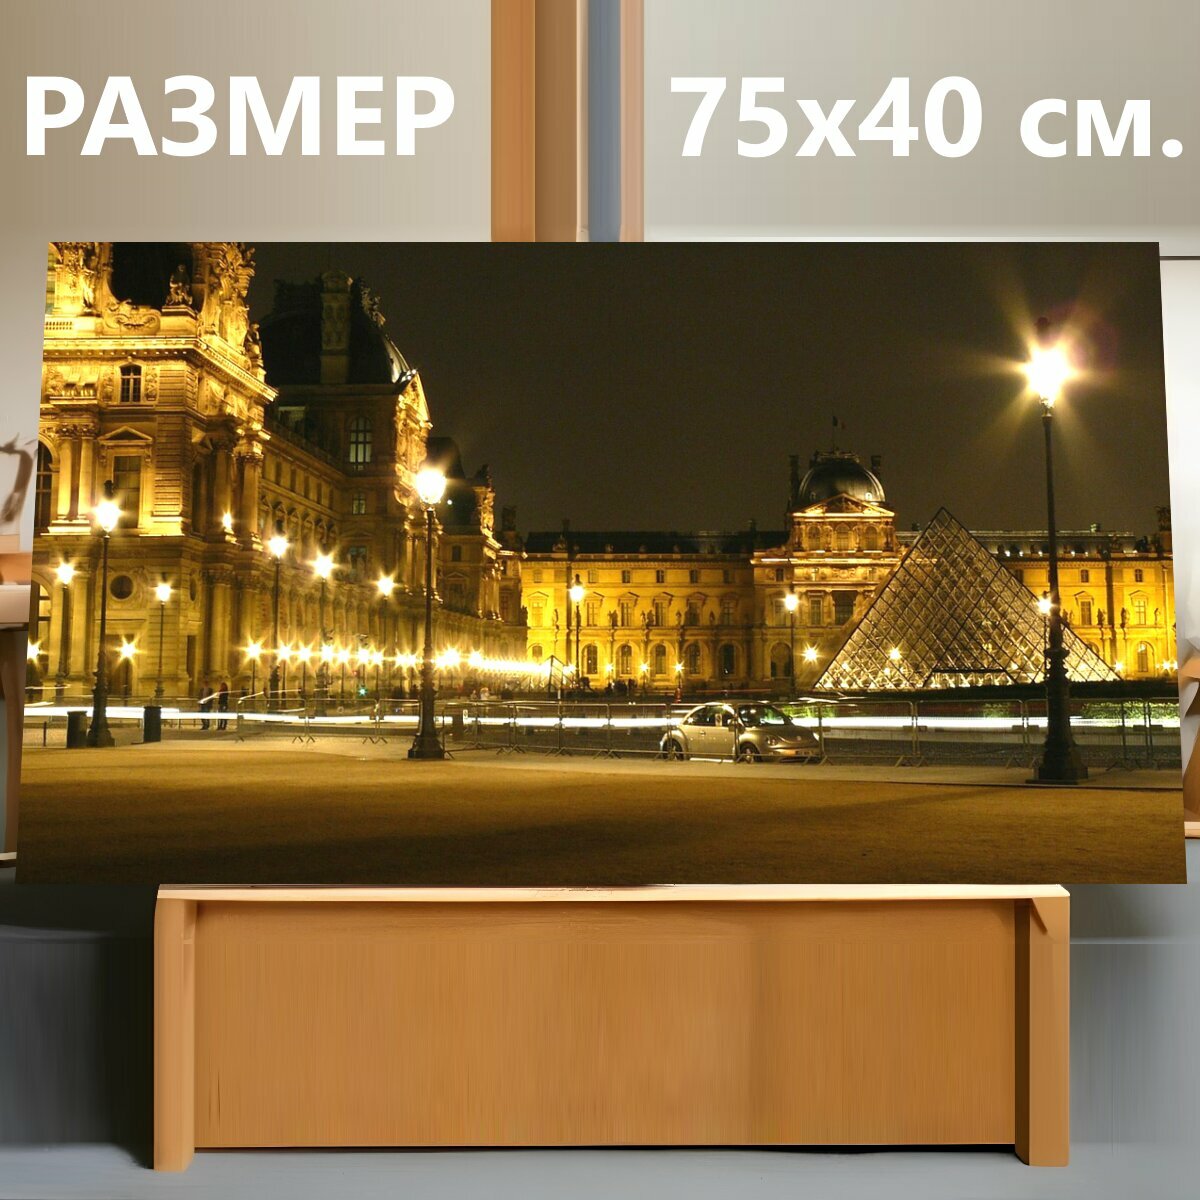 Картина на холсте "Париж, лувр, франция" на подрамнике 75х40 см. для интерьера